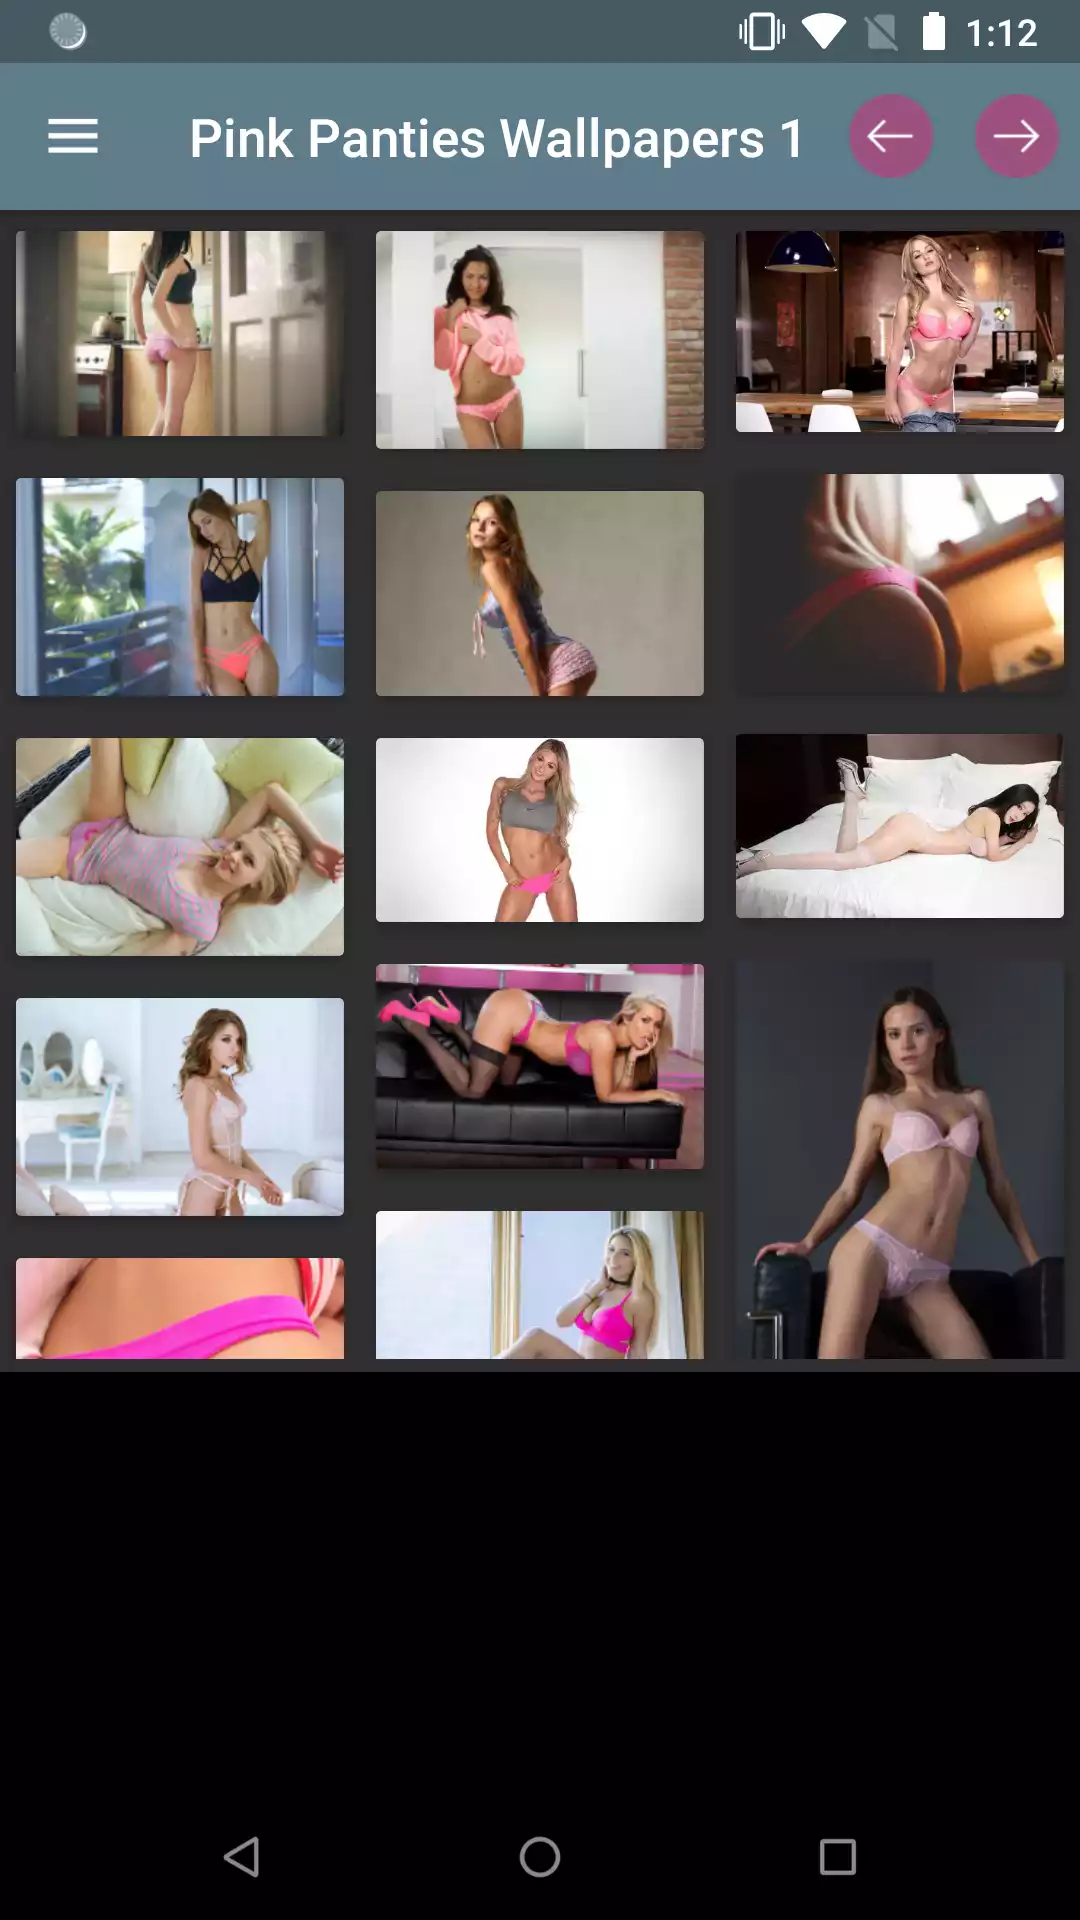 Pink Panties Wallpapers harem,girls,daily,panties,wallpapers,adult,sexy,pics,apps,hentai,search,manga,futanari,good,comix,android,pict,pic,pink,gallery,apk